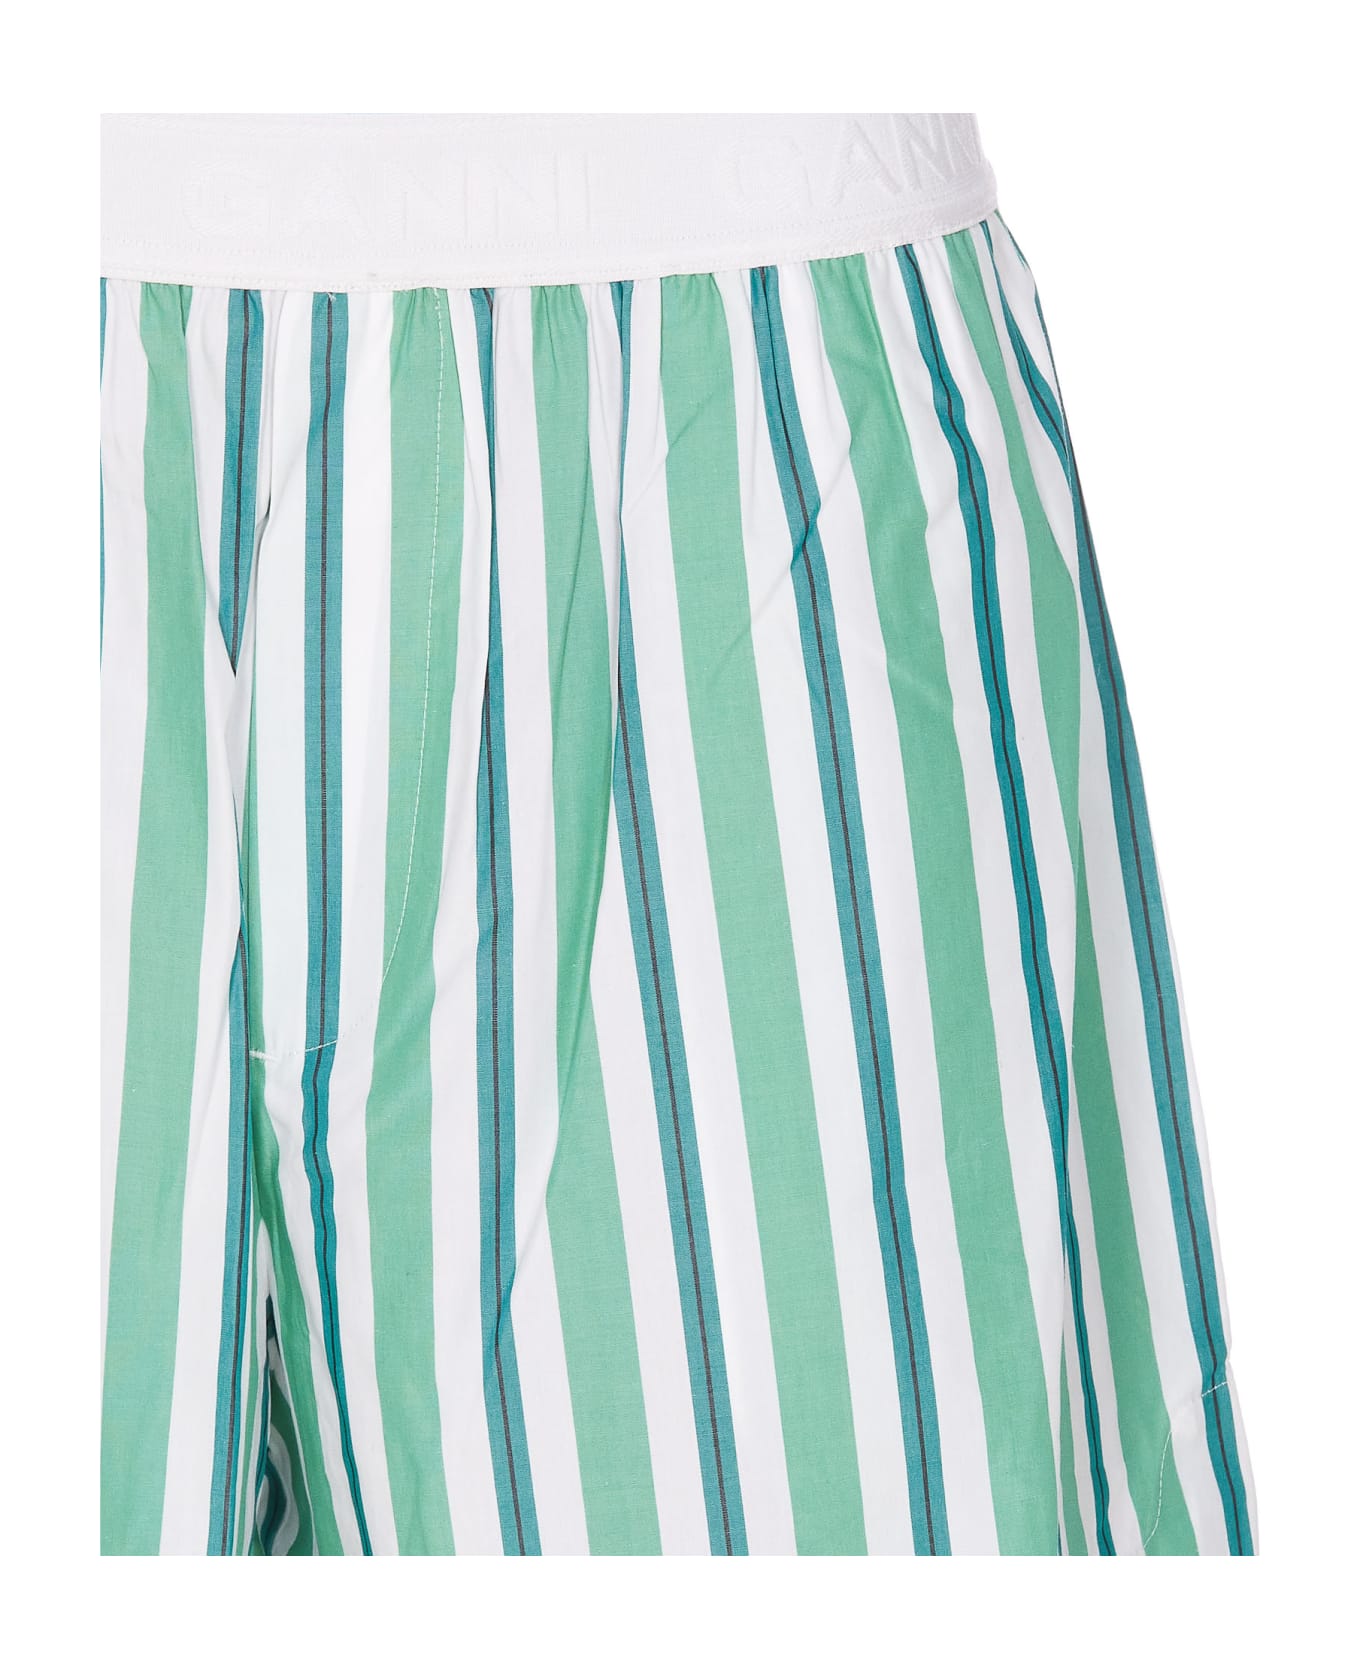 Ganni Striped Shorts - Verde